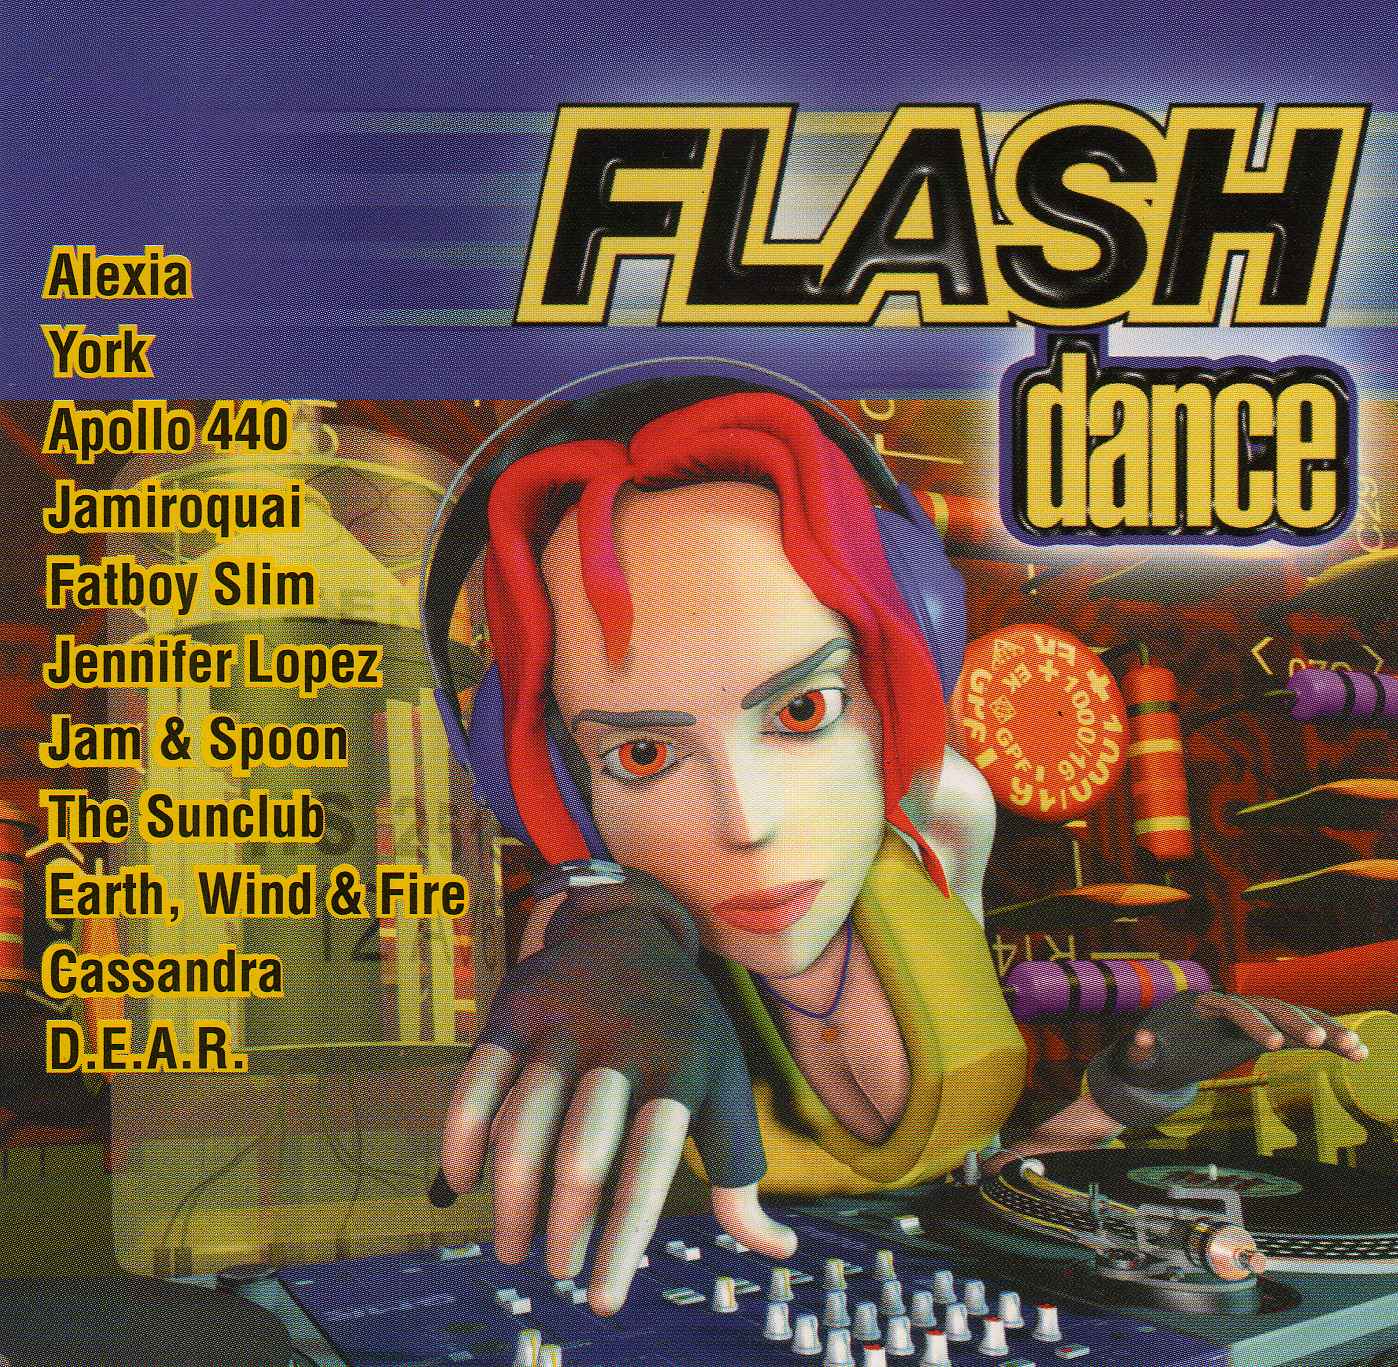 Soul o. Флэш дэнс. Flash Dance OST альбом. Apollo 440 Lost in Space. Apollo 440 Vinyl.